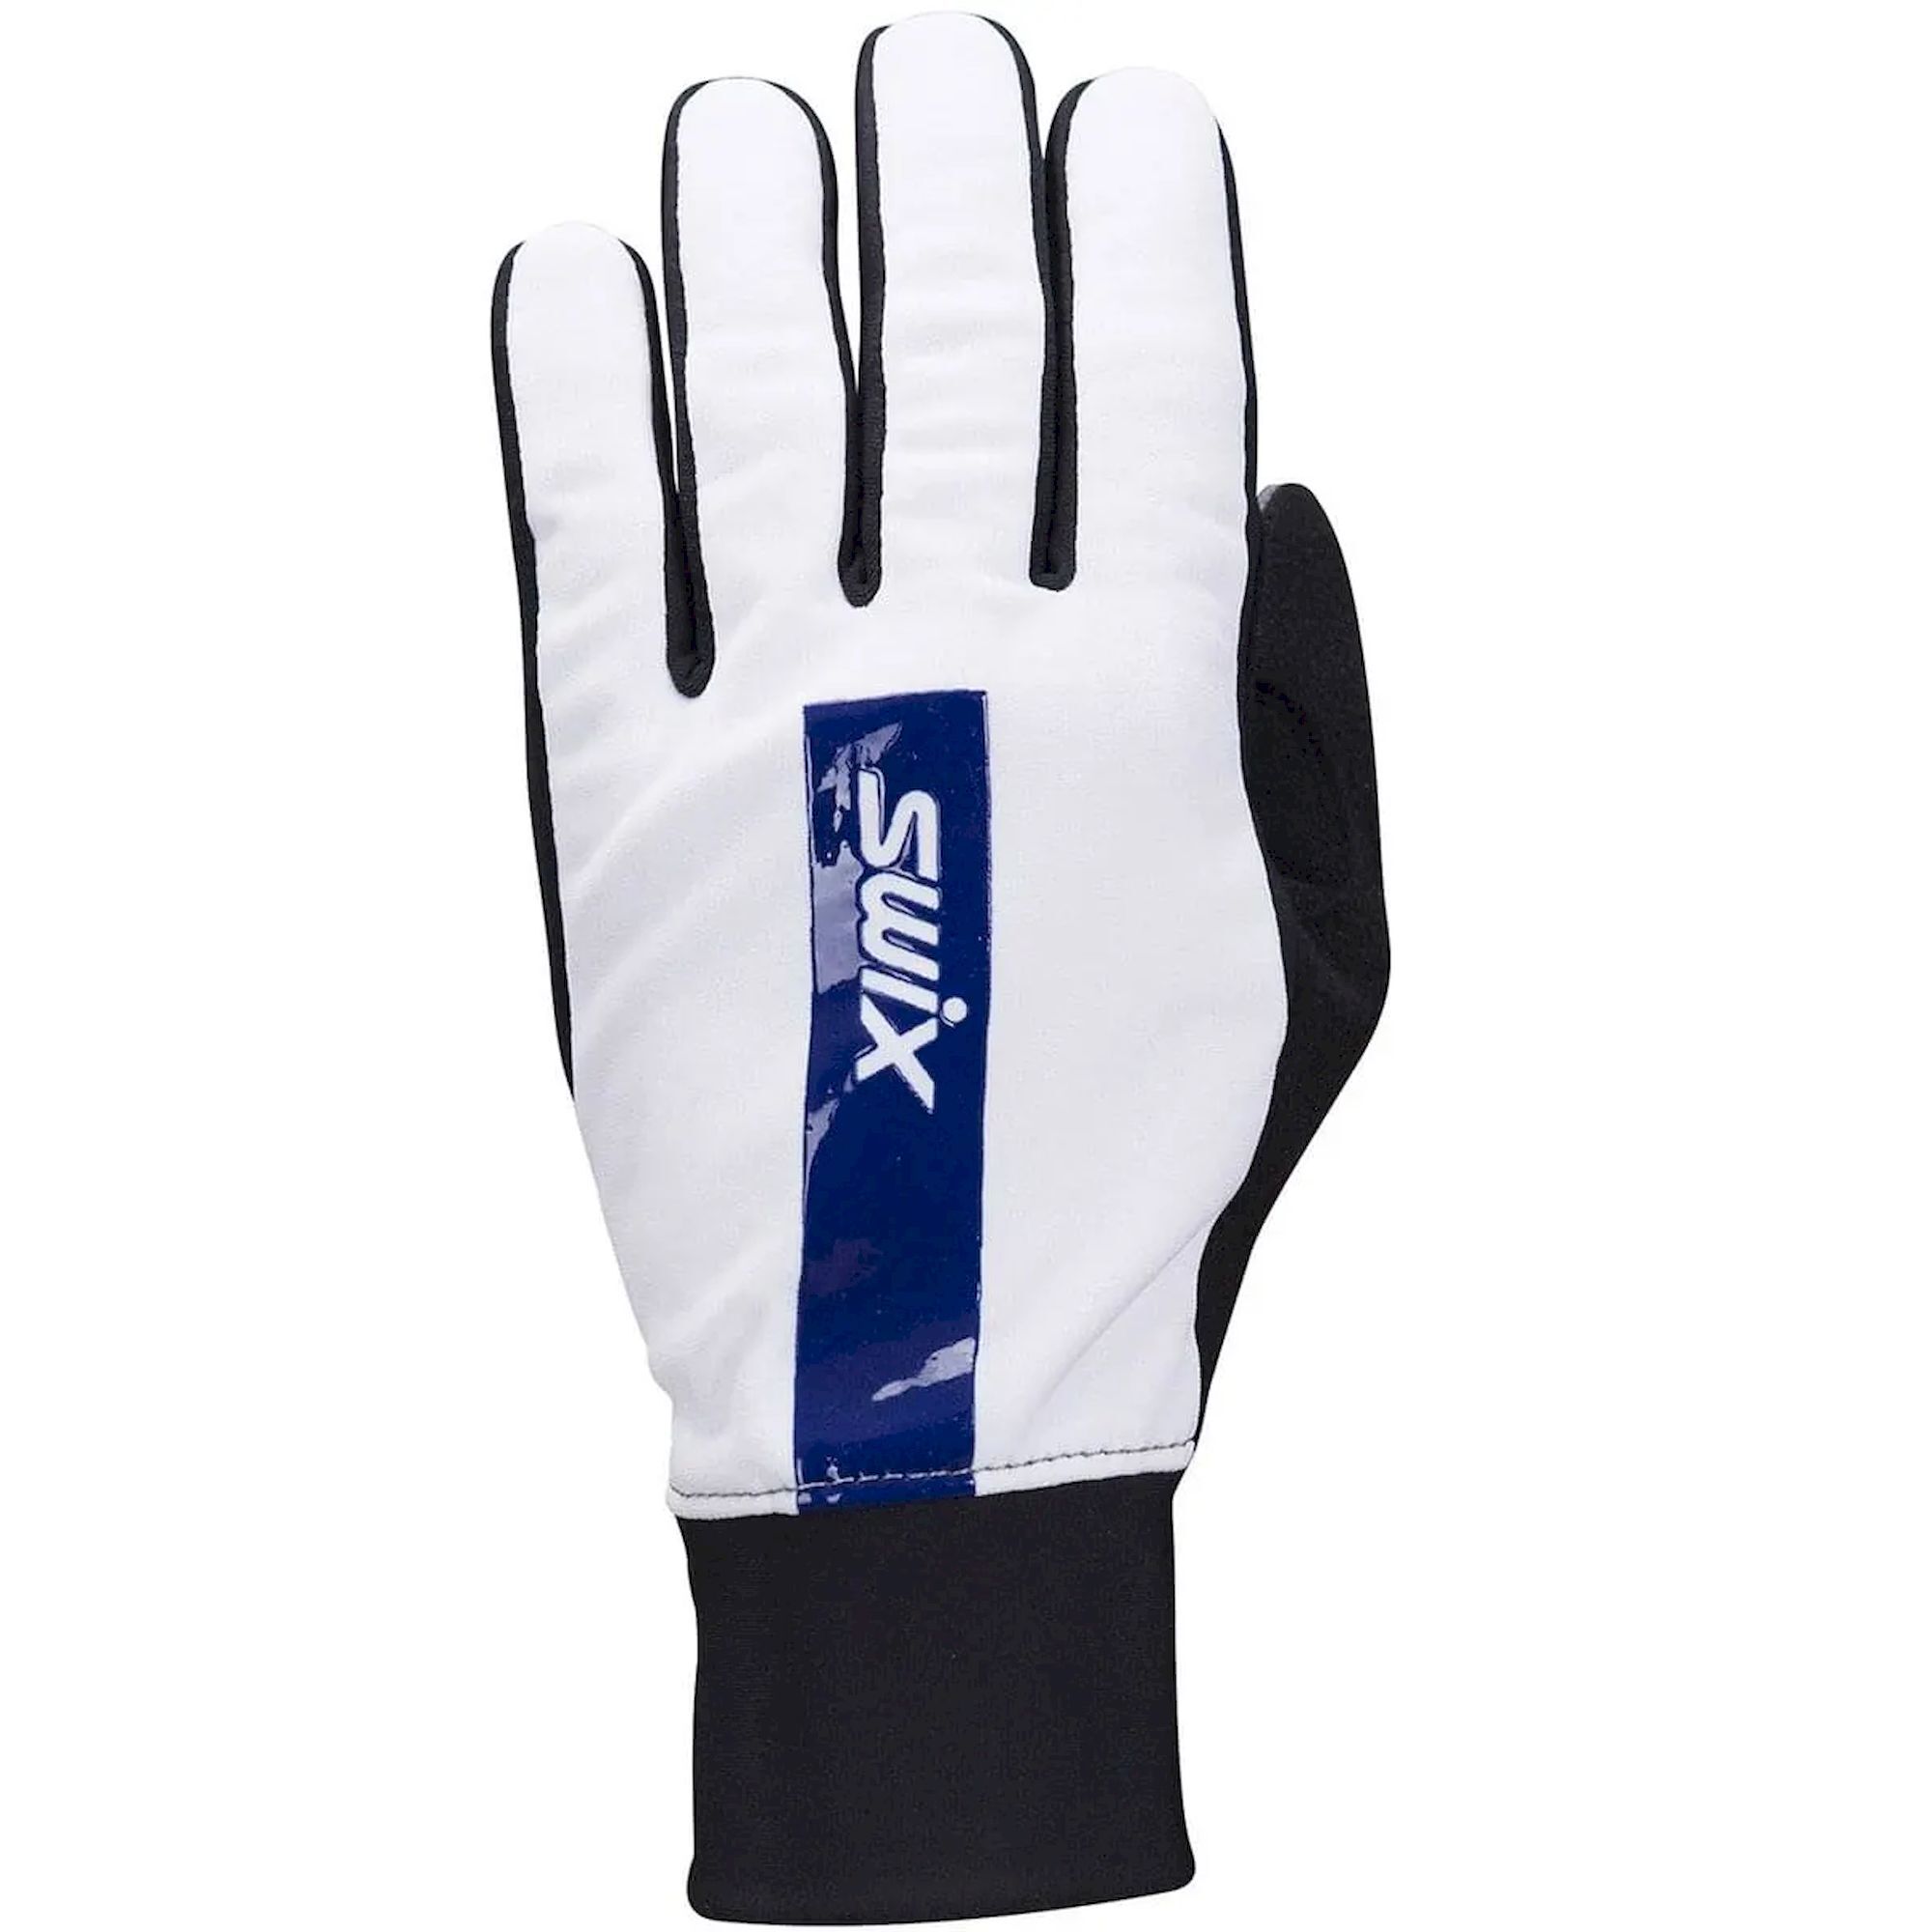 Swix Focus Glove - Ski gloves